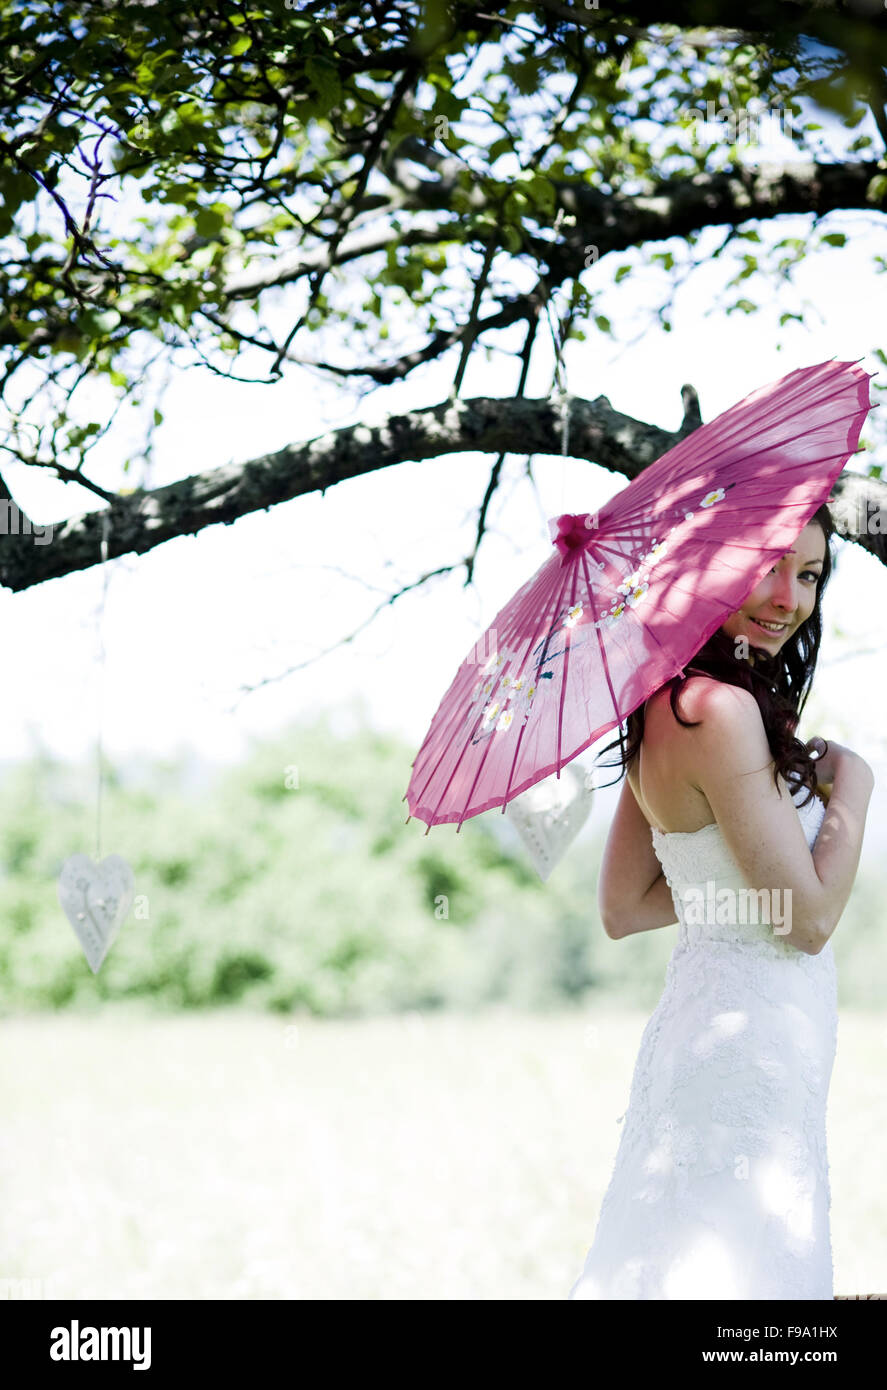 Novia vestido blanco con sombrilla posando en la pradera Foto de stock